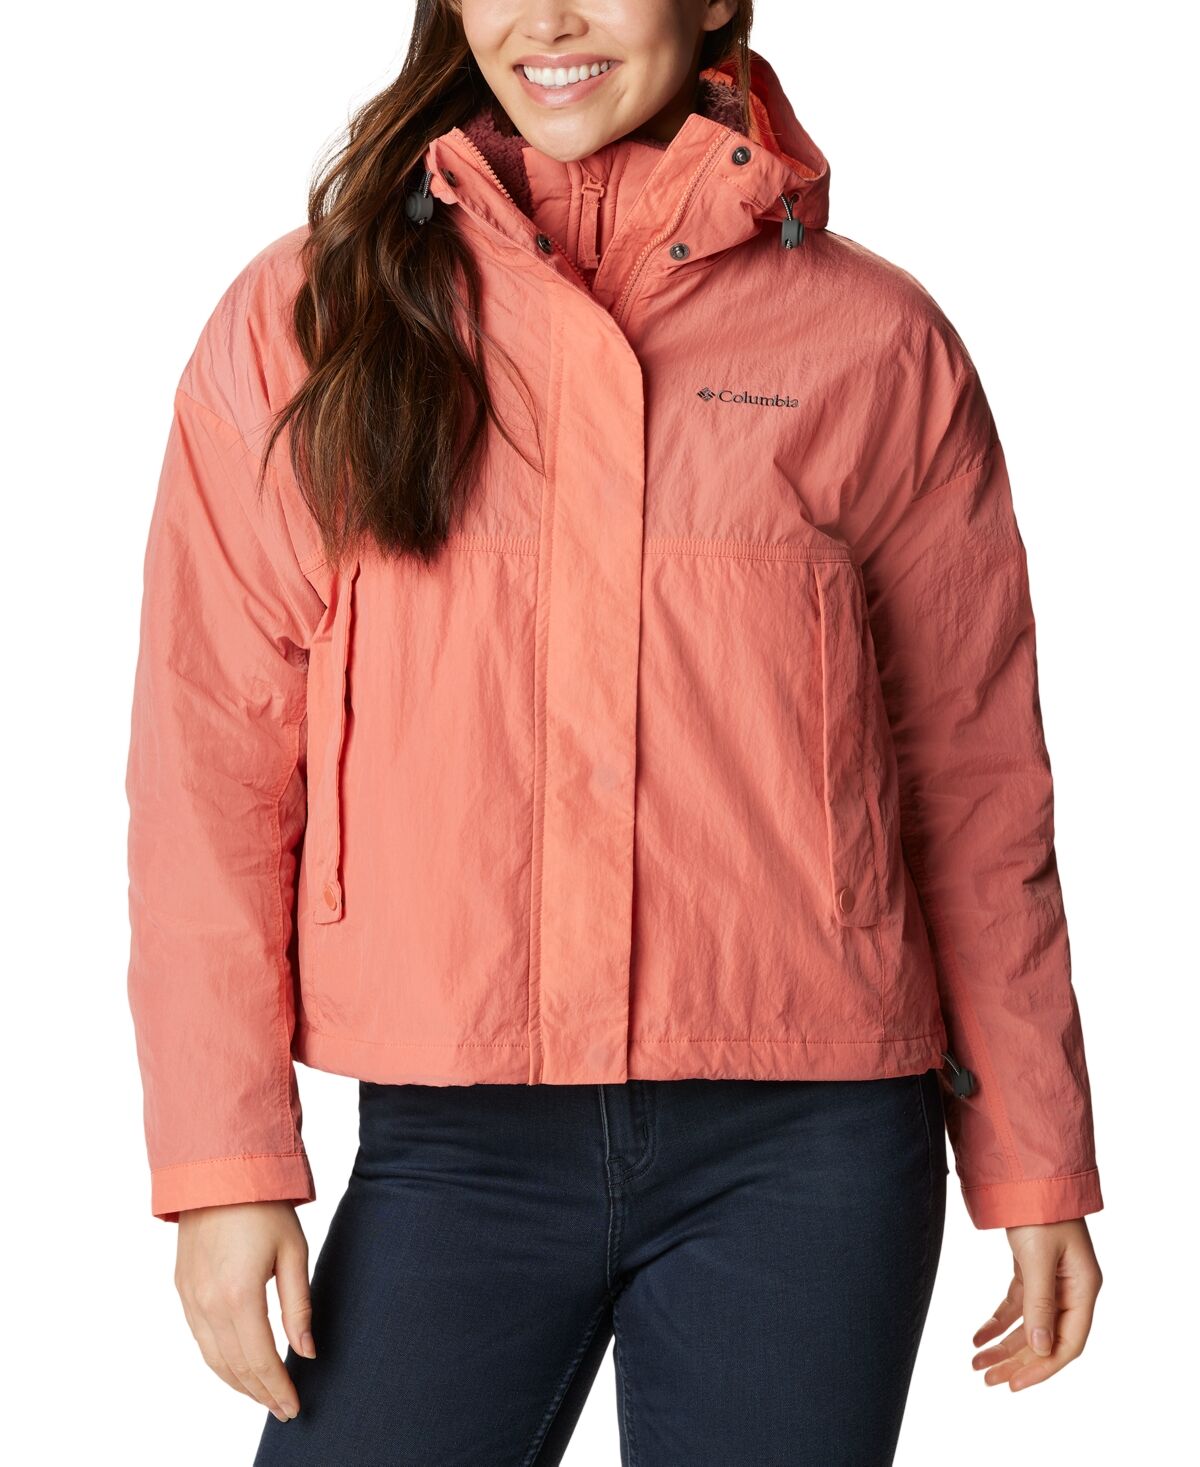 Columbia Women's Laurelwoods Ii Interchange Hooded Jacket - Faded Peach